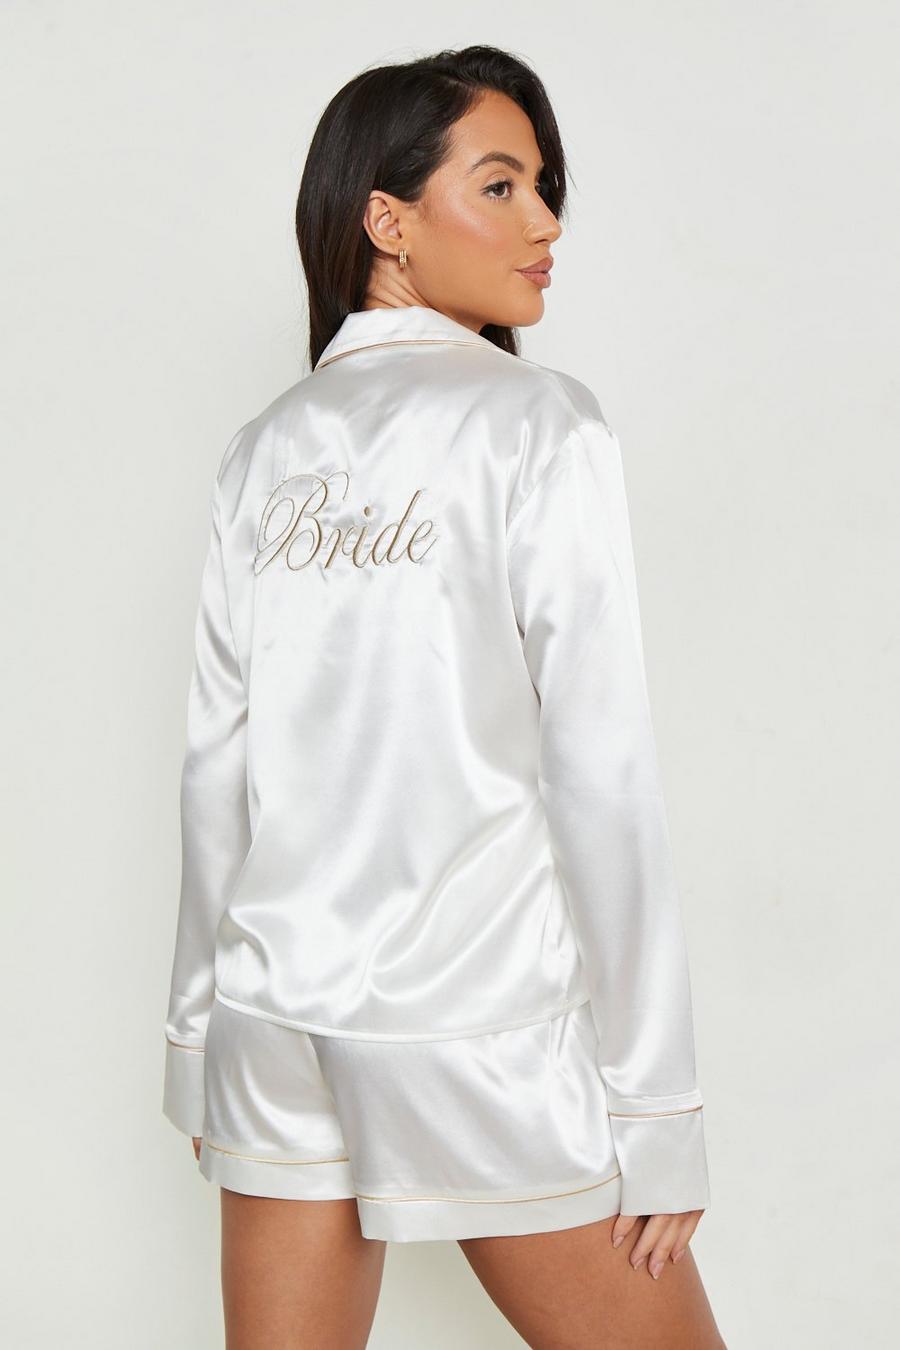 White Bride Embroidery Pj Short Set